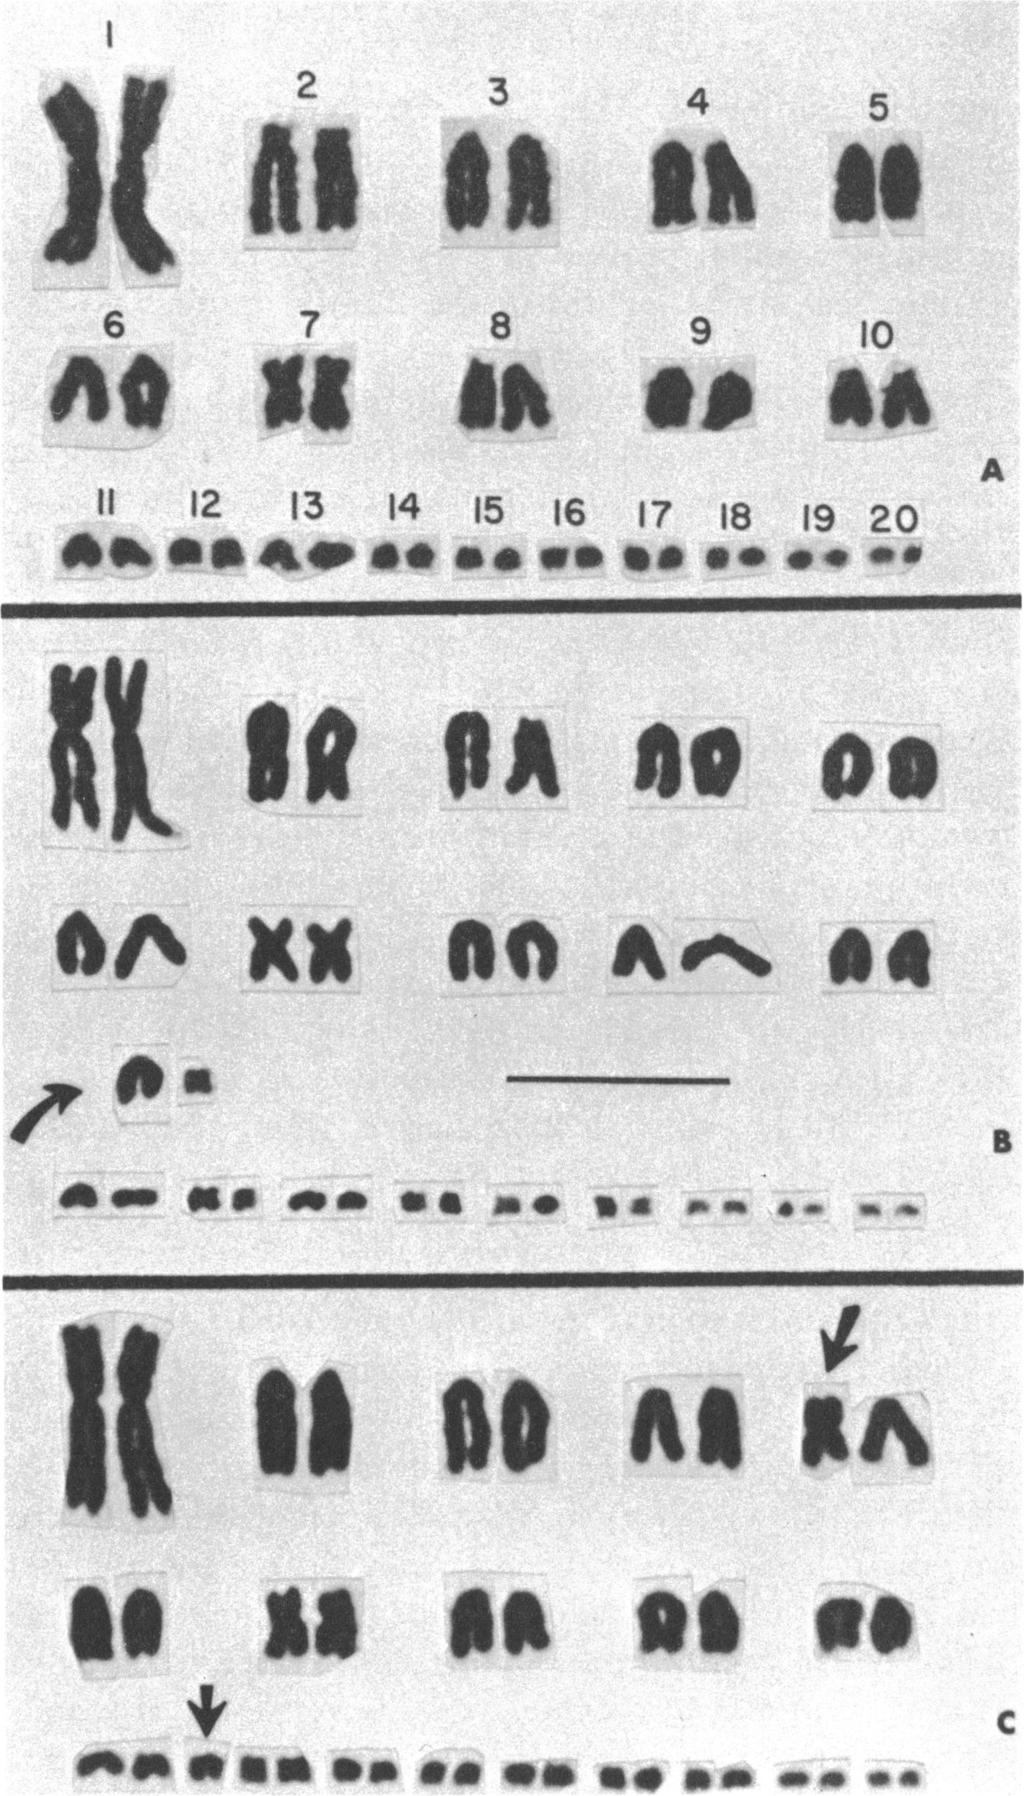 6" 2 ~ ~~~3 ~ 4 5 6 7 8 9 10 1 12 1 3 14 15 16 17 18 19 20 A bs 4* 00 1*...e. * me oa^ s. f.. o o o 0 _ FIG. 4. Chromosomes of three specimens of Sceloporus melanorhinus. A. Karyotype KA (2n = 40), described on pages 14-16; U.